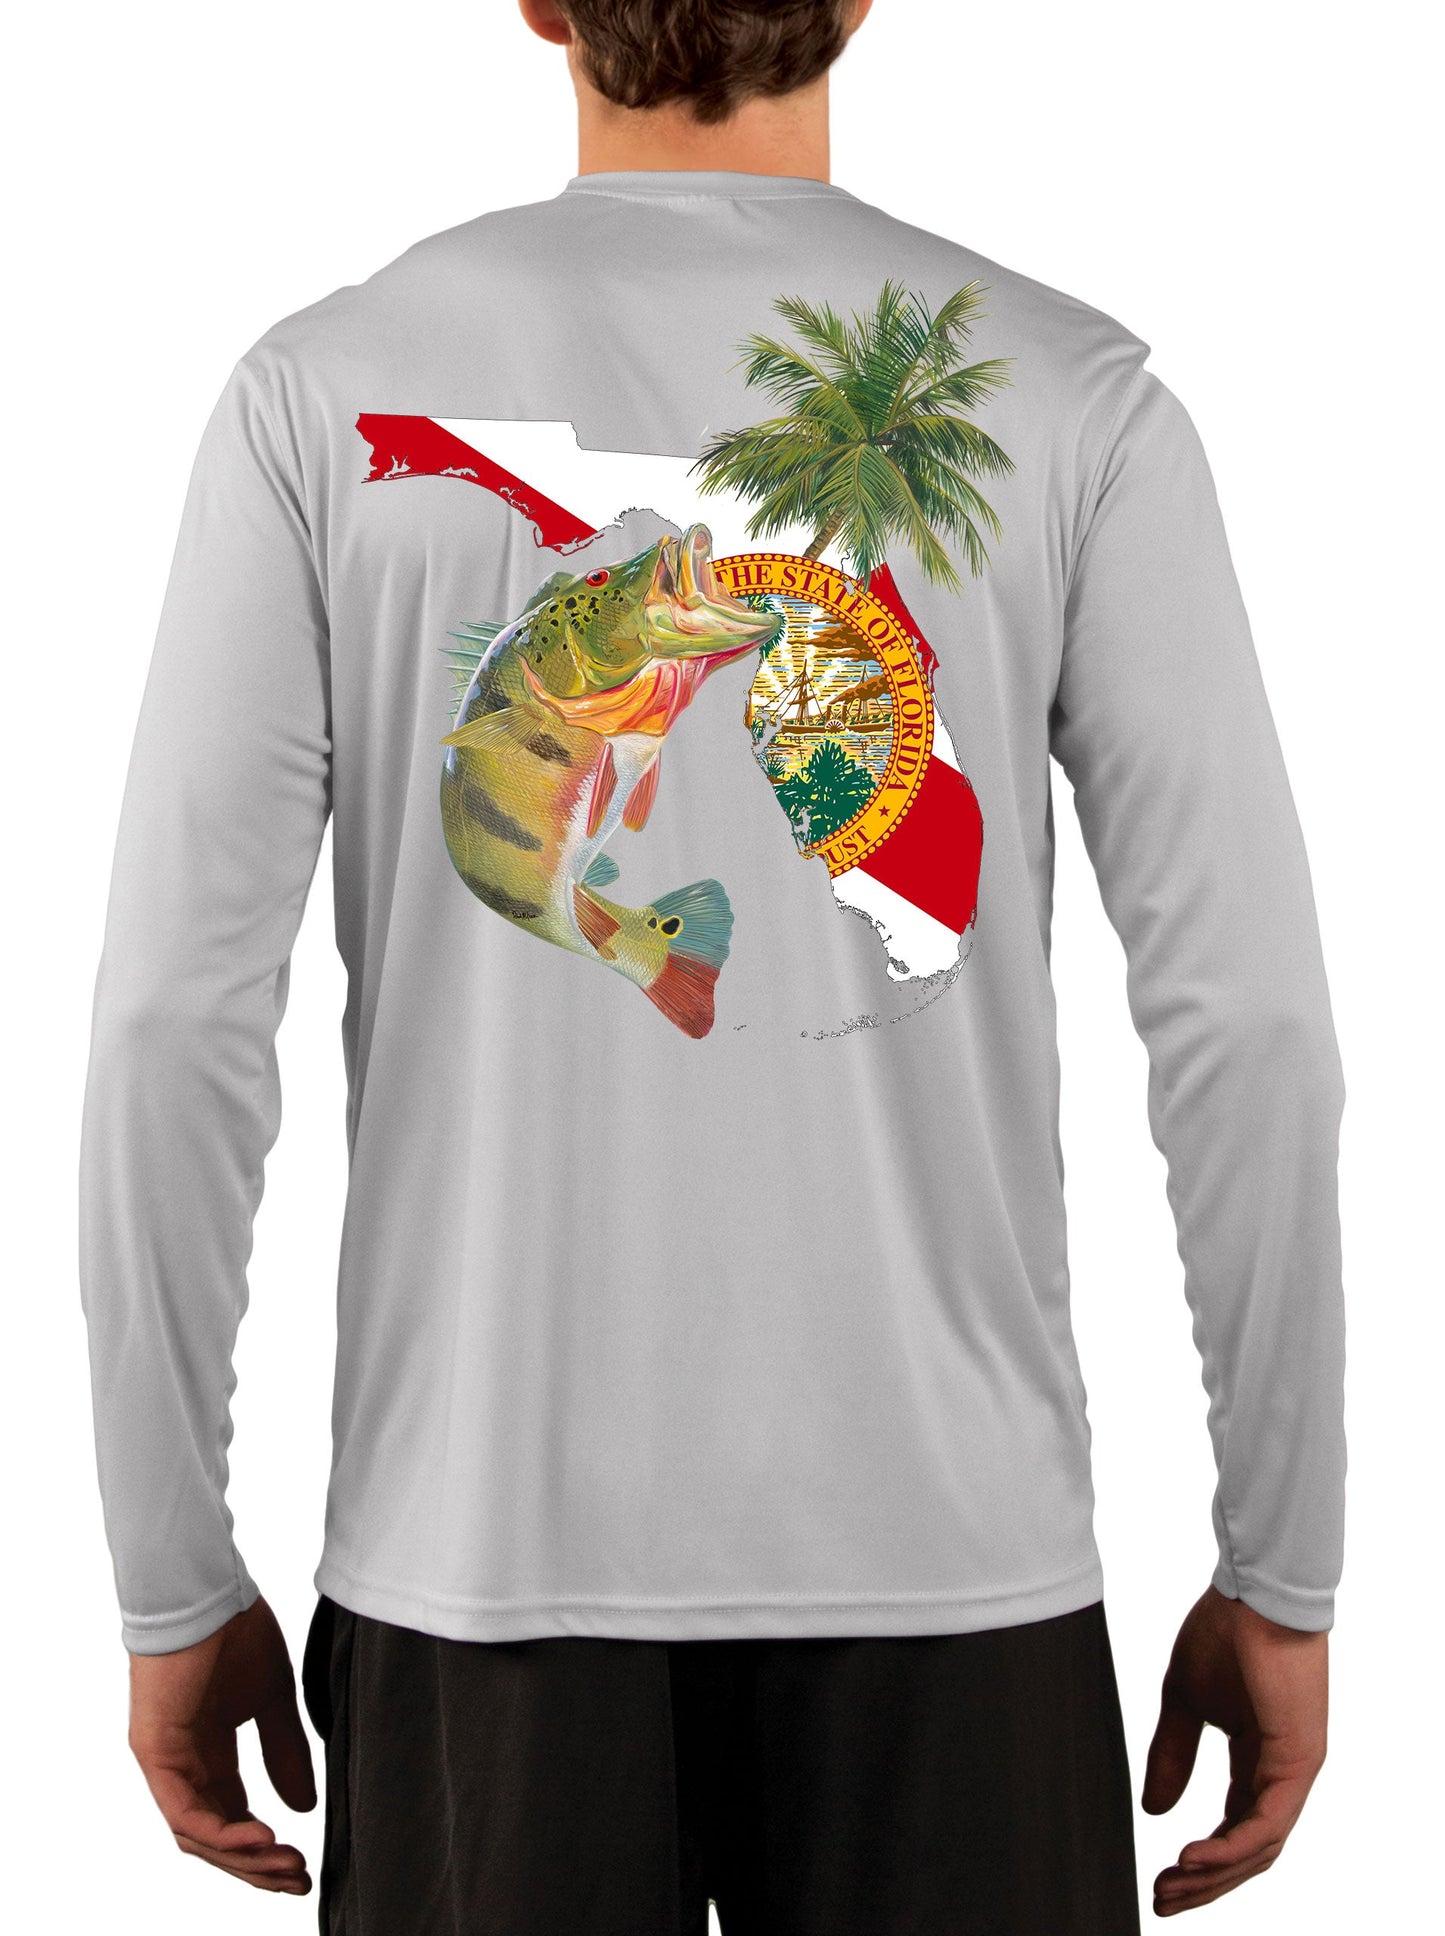 Peacock Bass Florida Fishing Shirt with FL State Flag Sleeve - Skiff Life